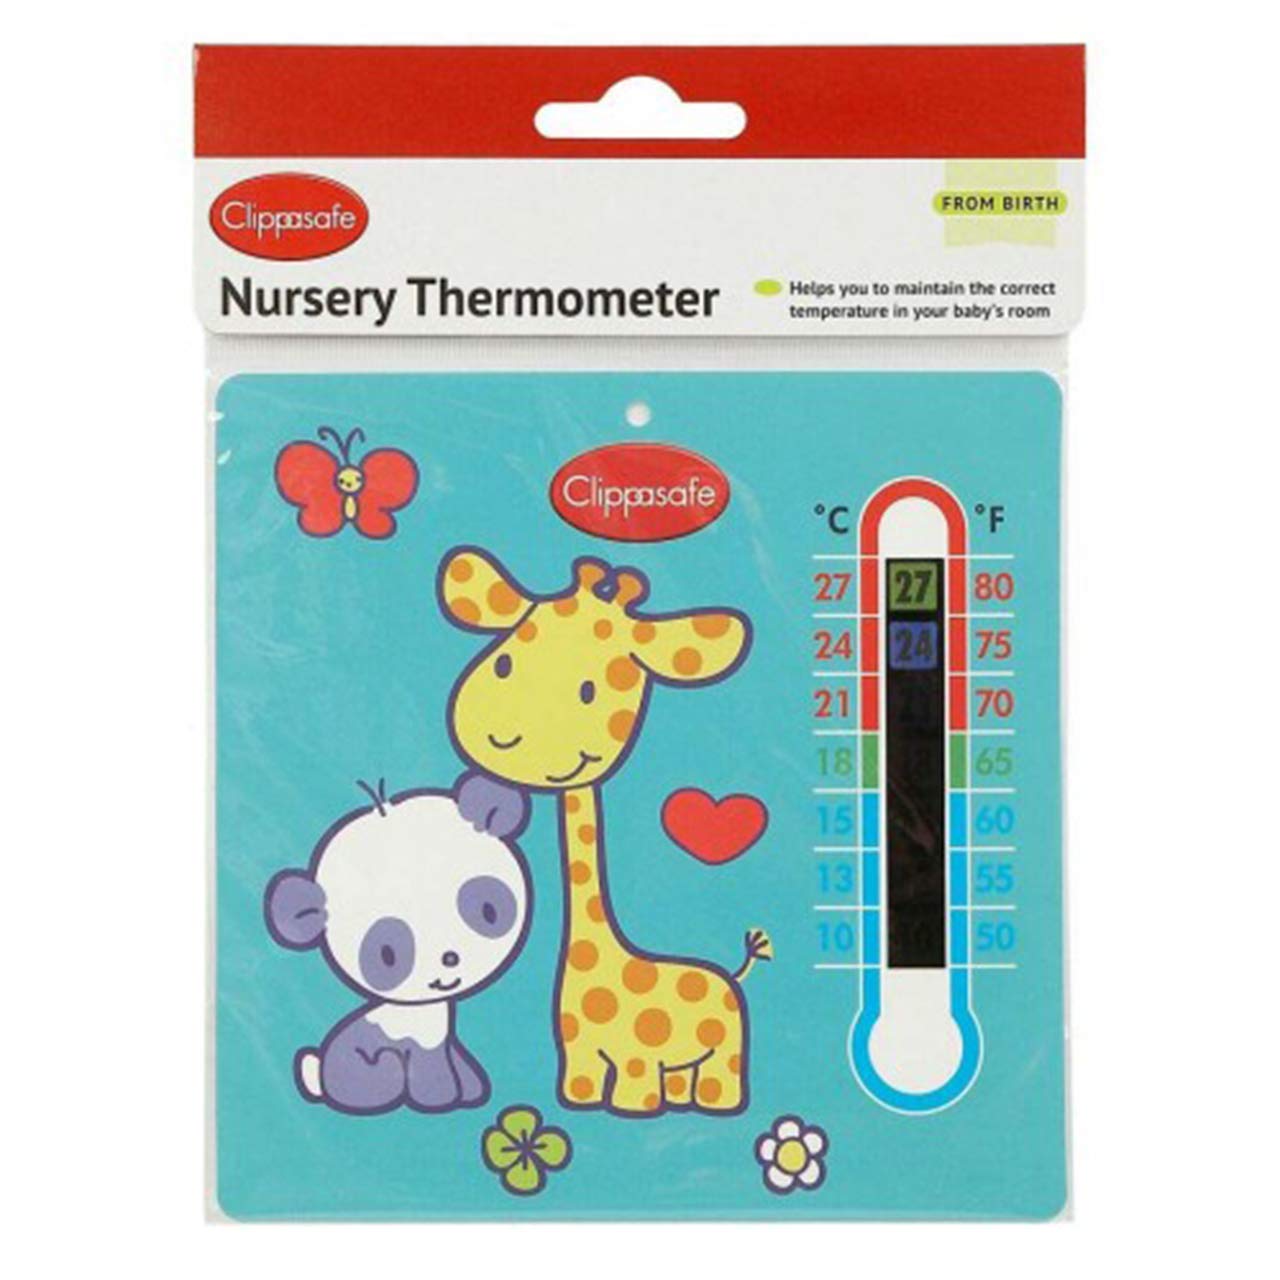 Clippasafe| Nursery Thermometer | Earthlets.com |  | baby care safety